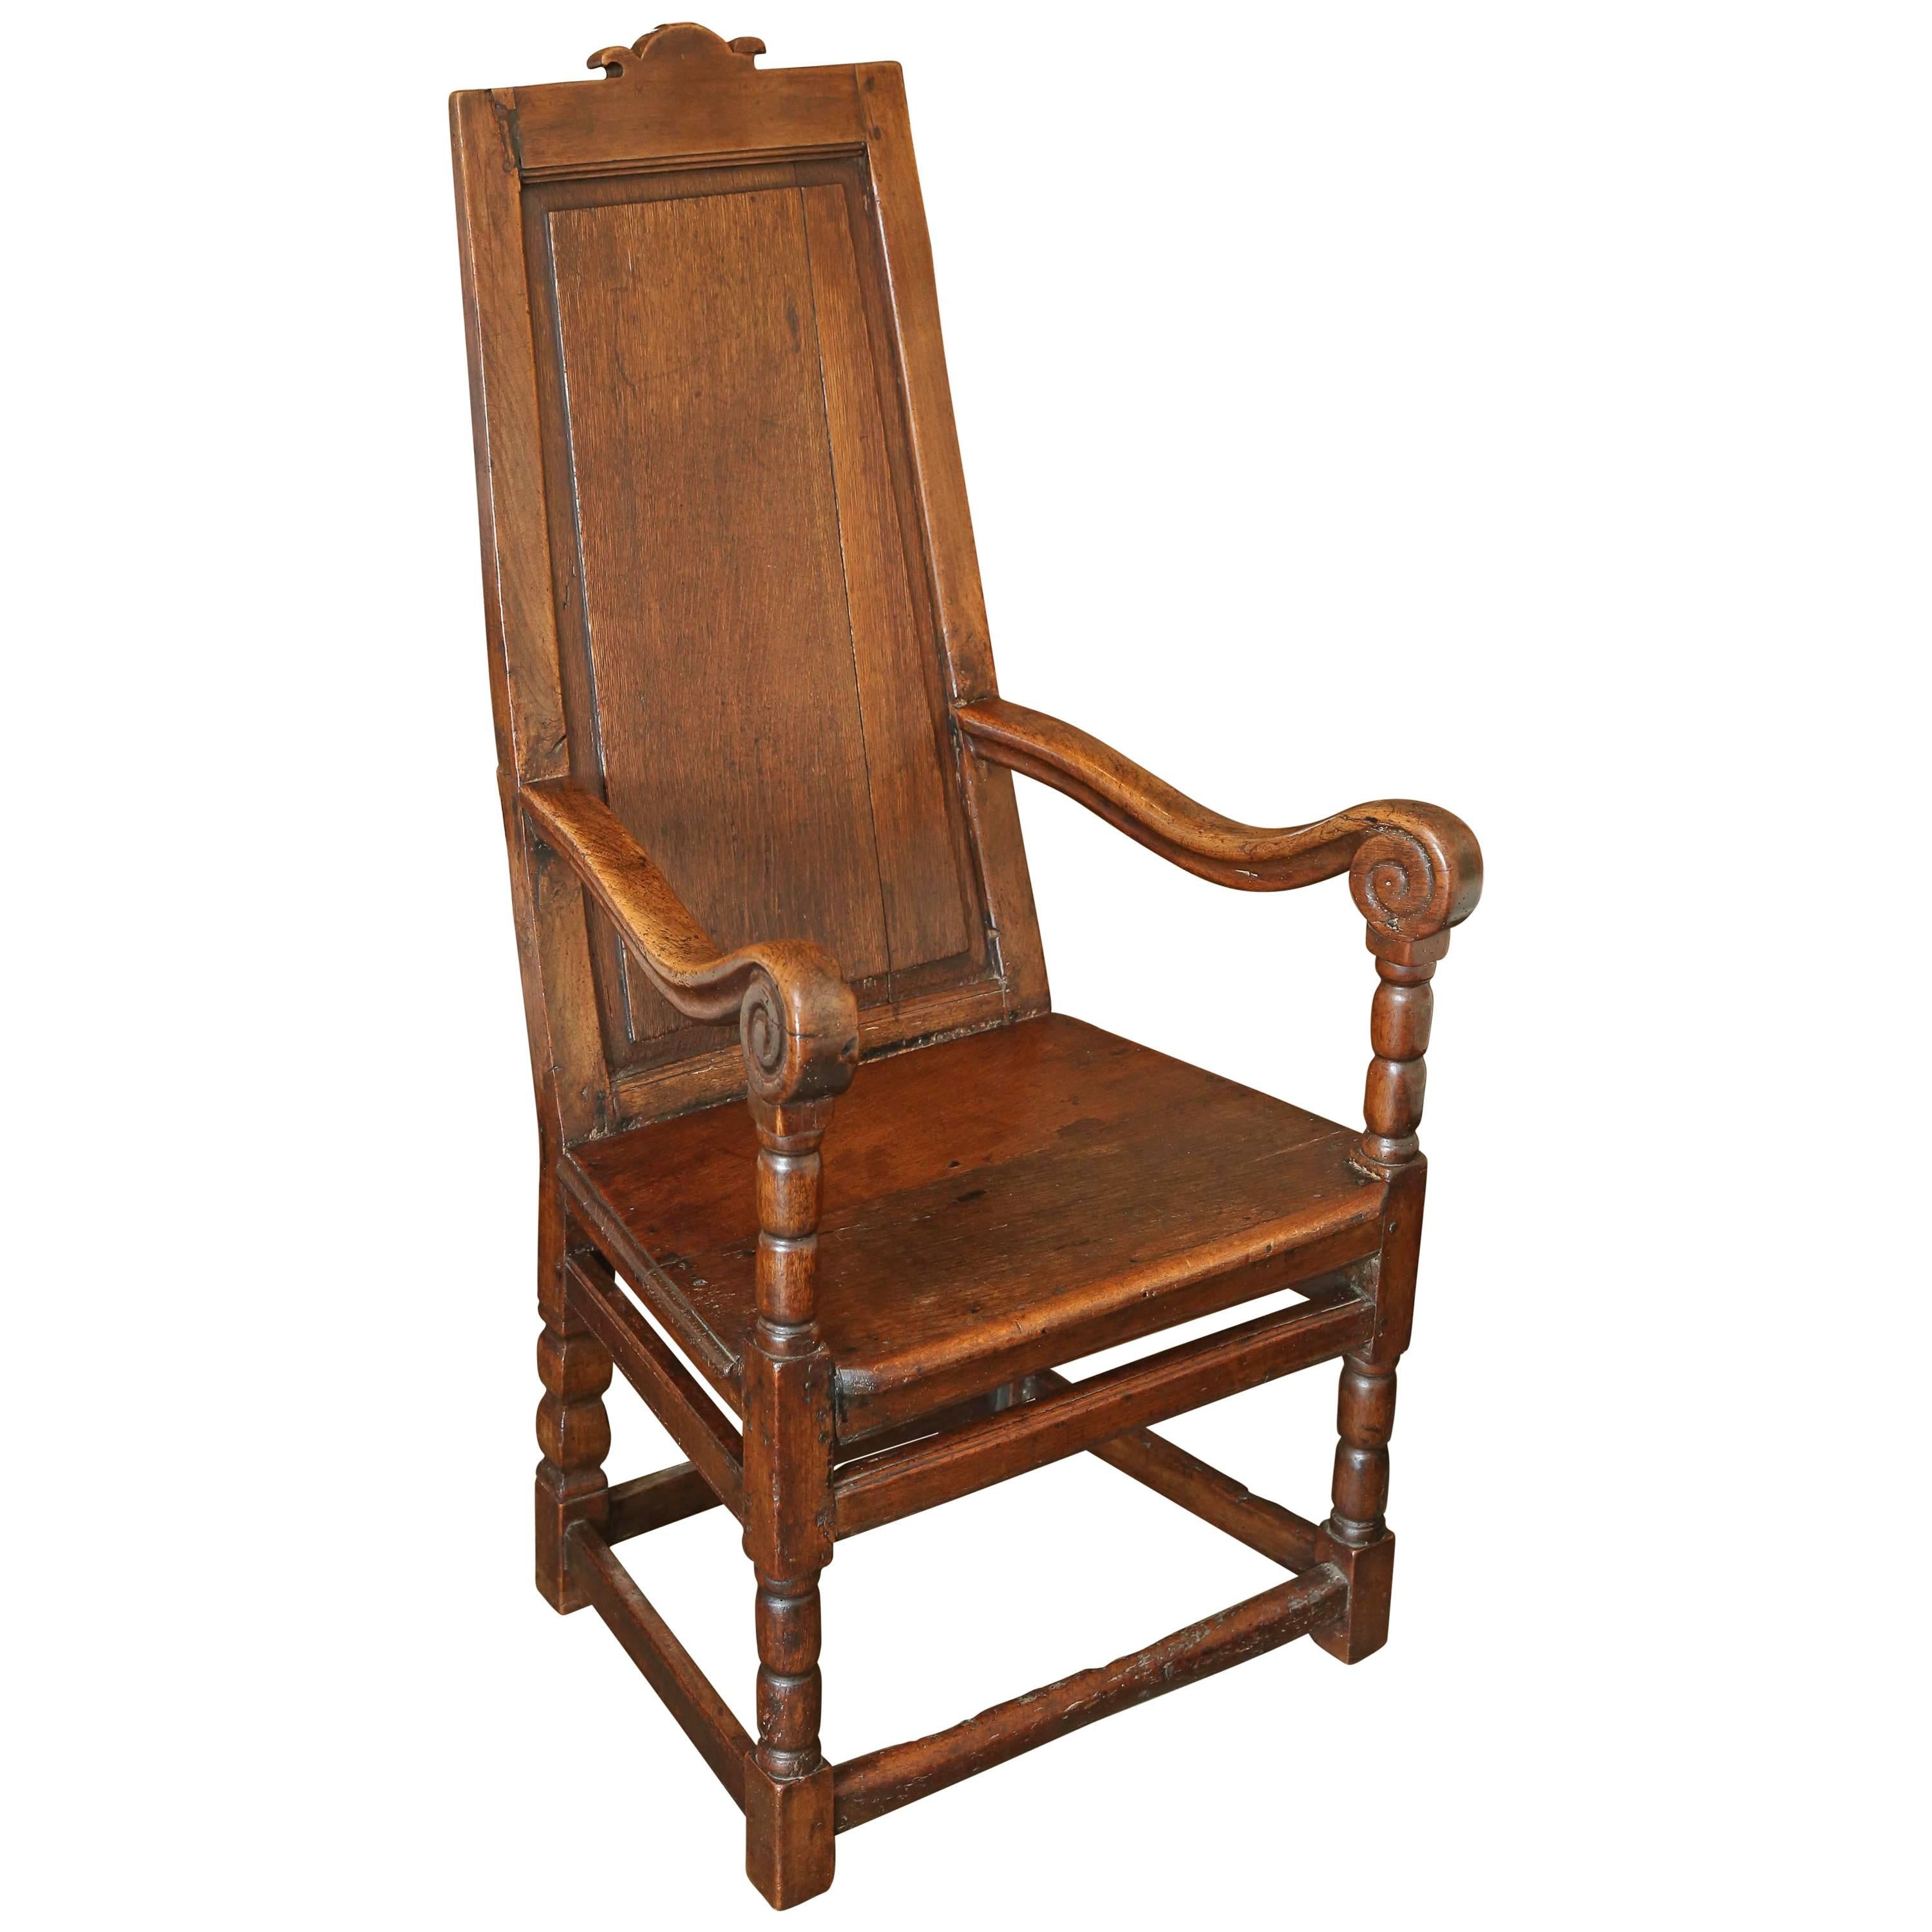 Welsh Wainscot Hall Chair aus Eiche, 18. Jahrhundert